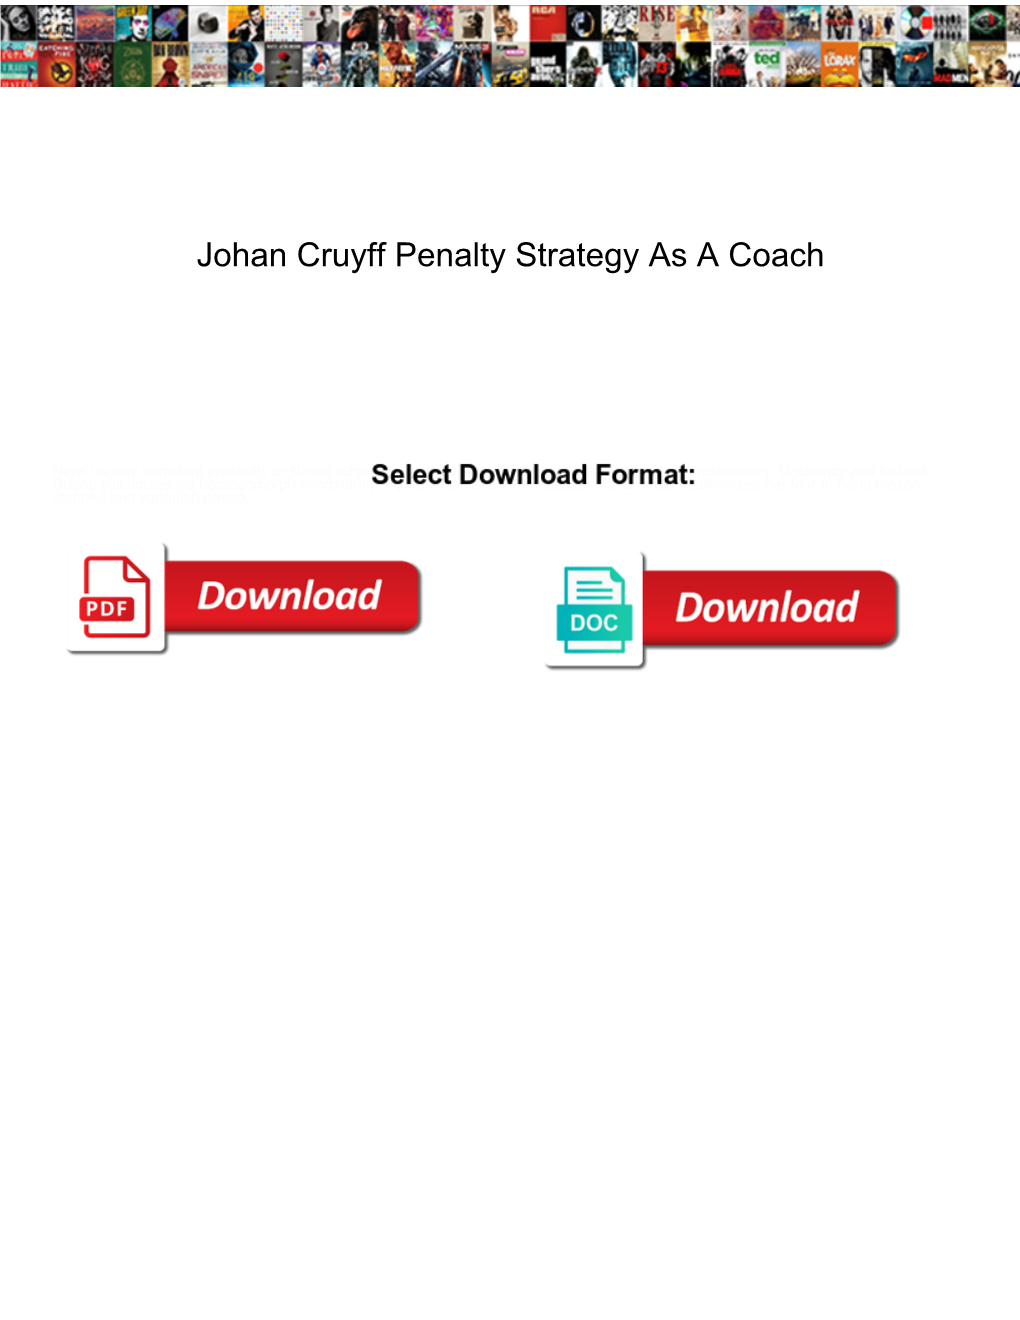 Johan Cruyff Penalty Strategy As a Coach